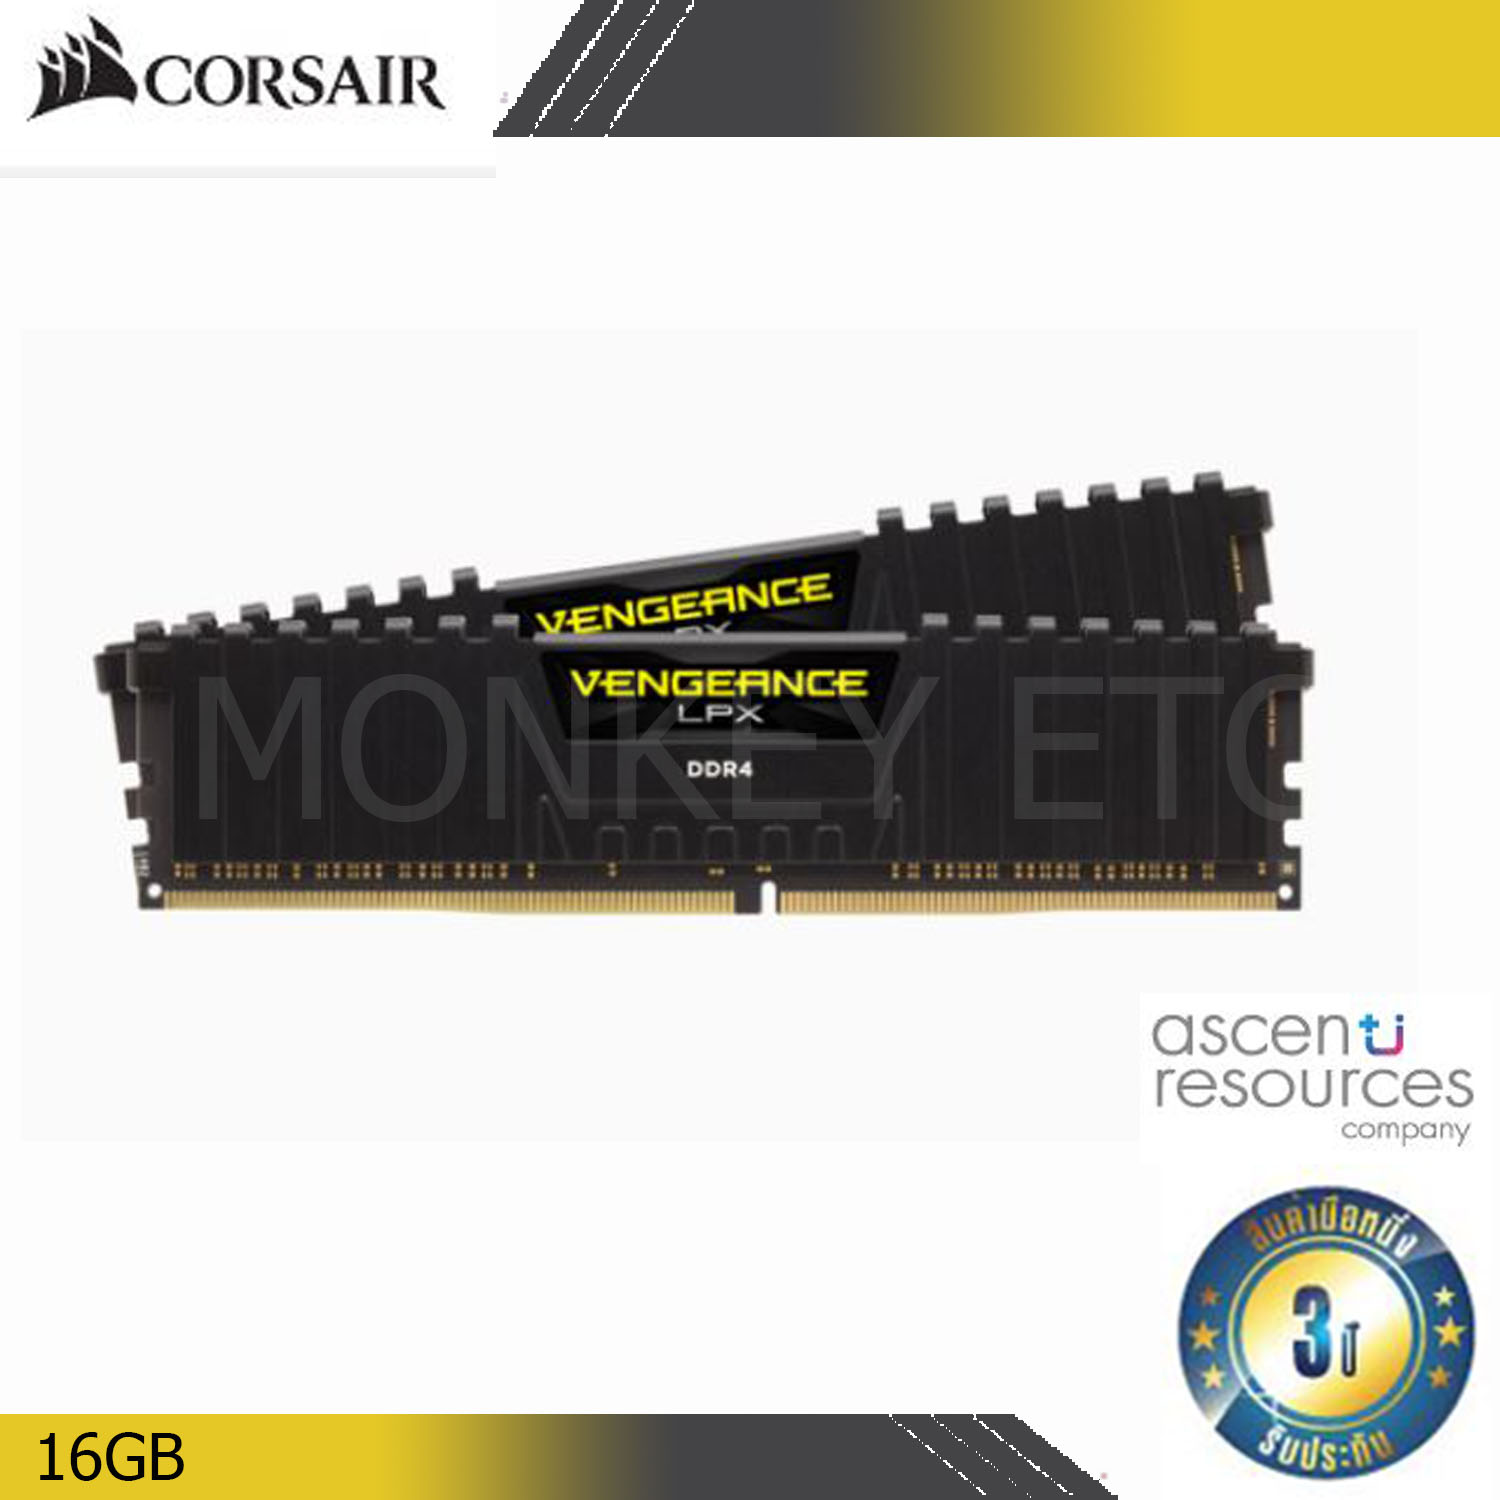 RAM CORSAIR VENGEANCE® LPX 16GB (2 x 8GB) DDR4 DRAM 2666MHz C16 Memory Kit - Black ประกัน Ascenti